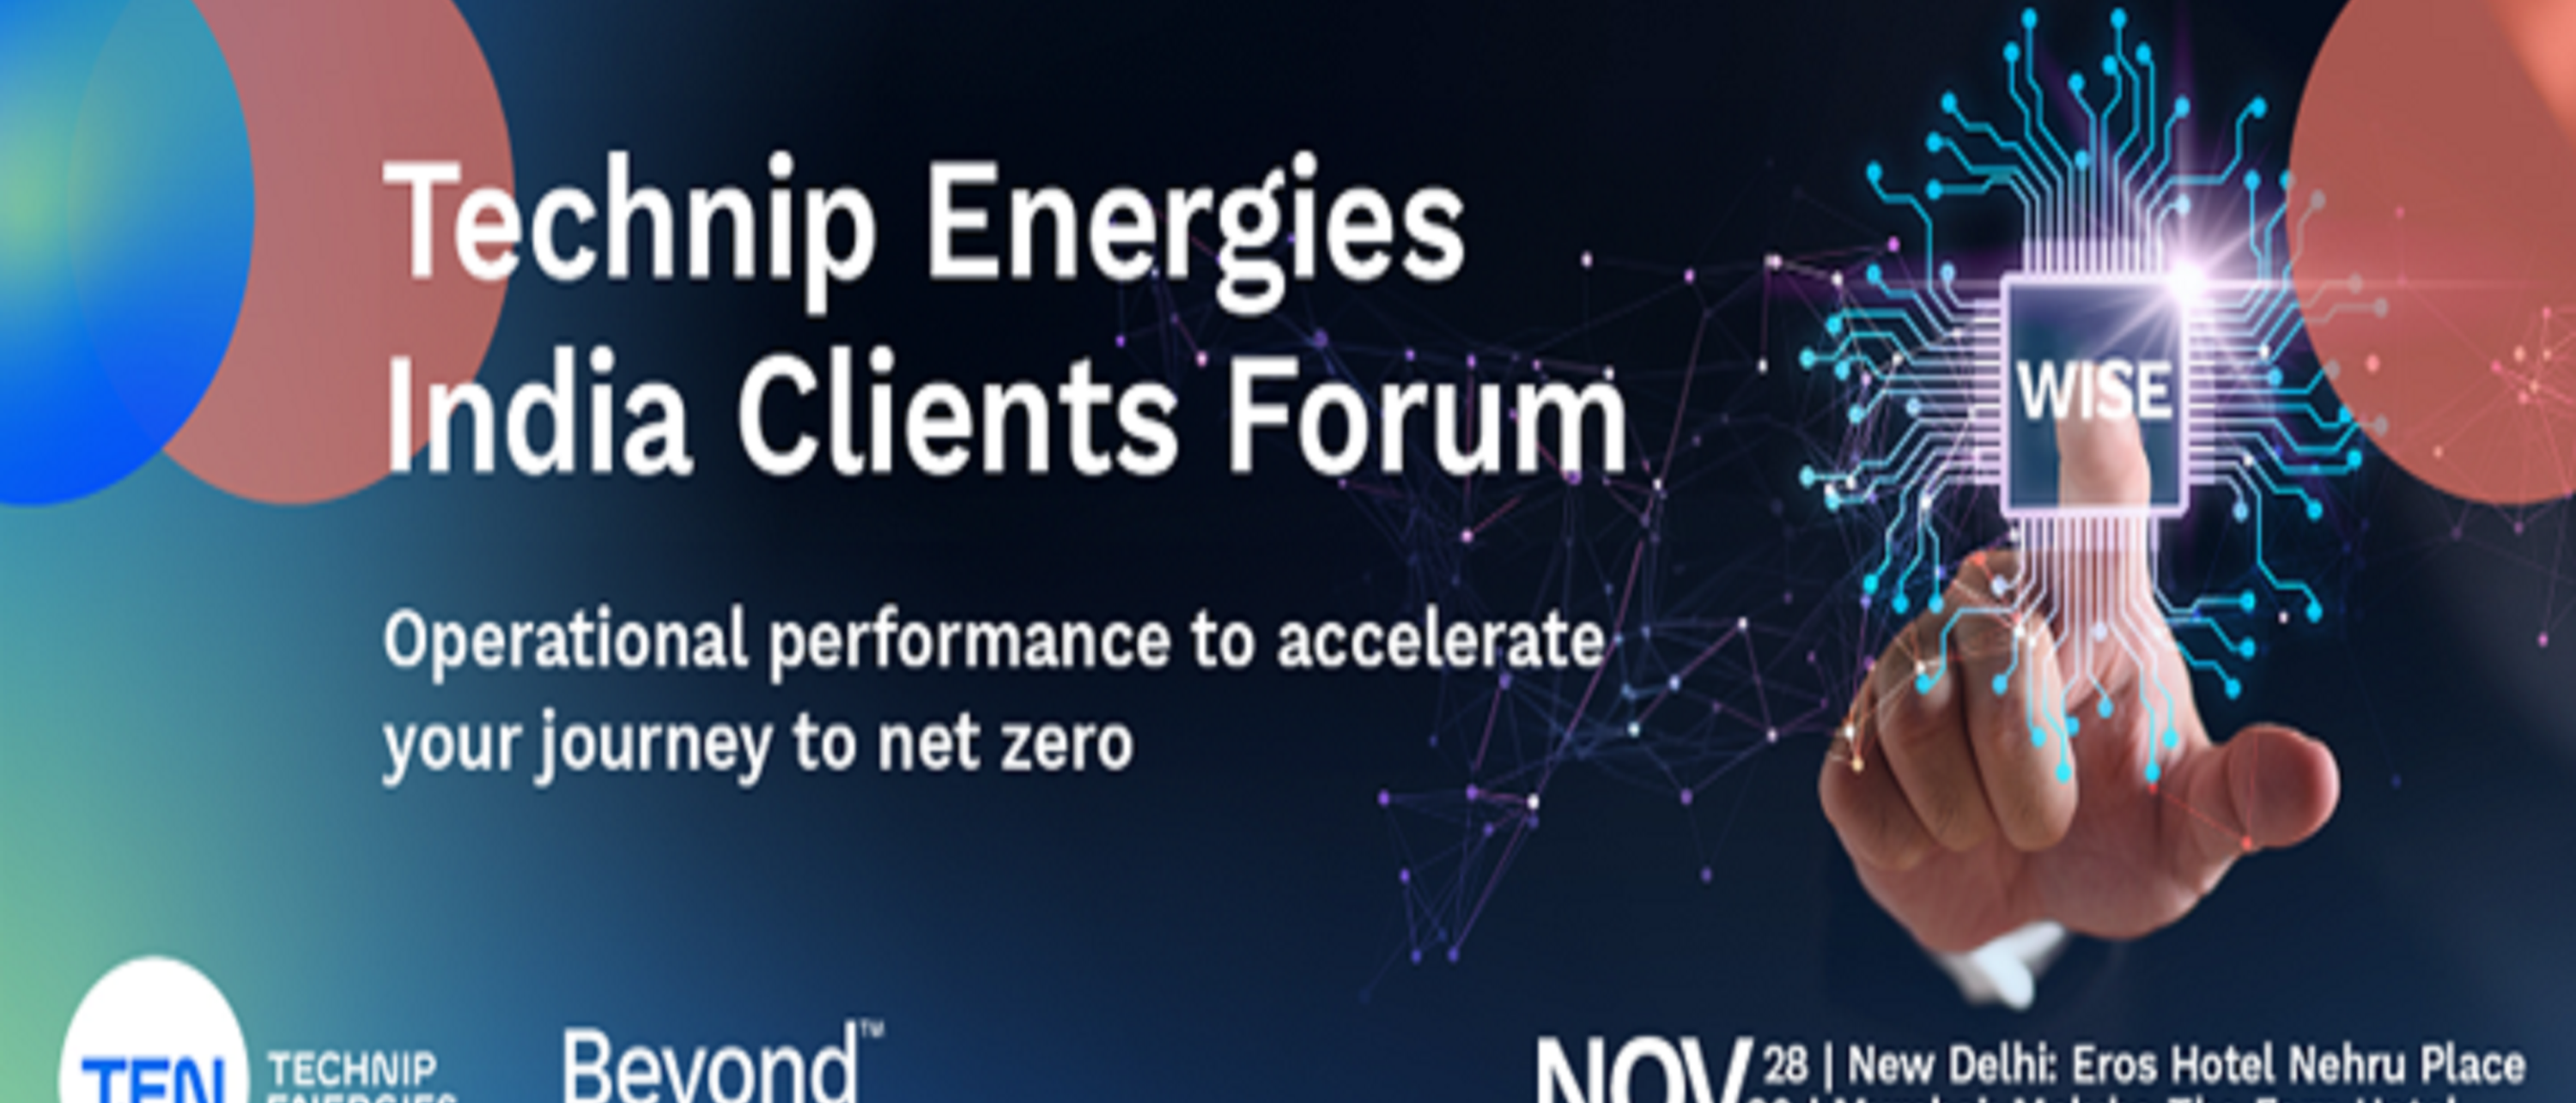 Technip Energies India Clients Forum